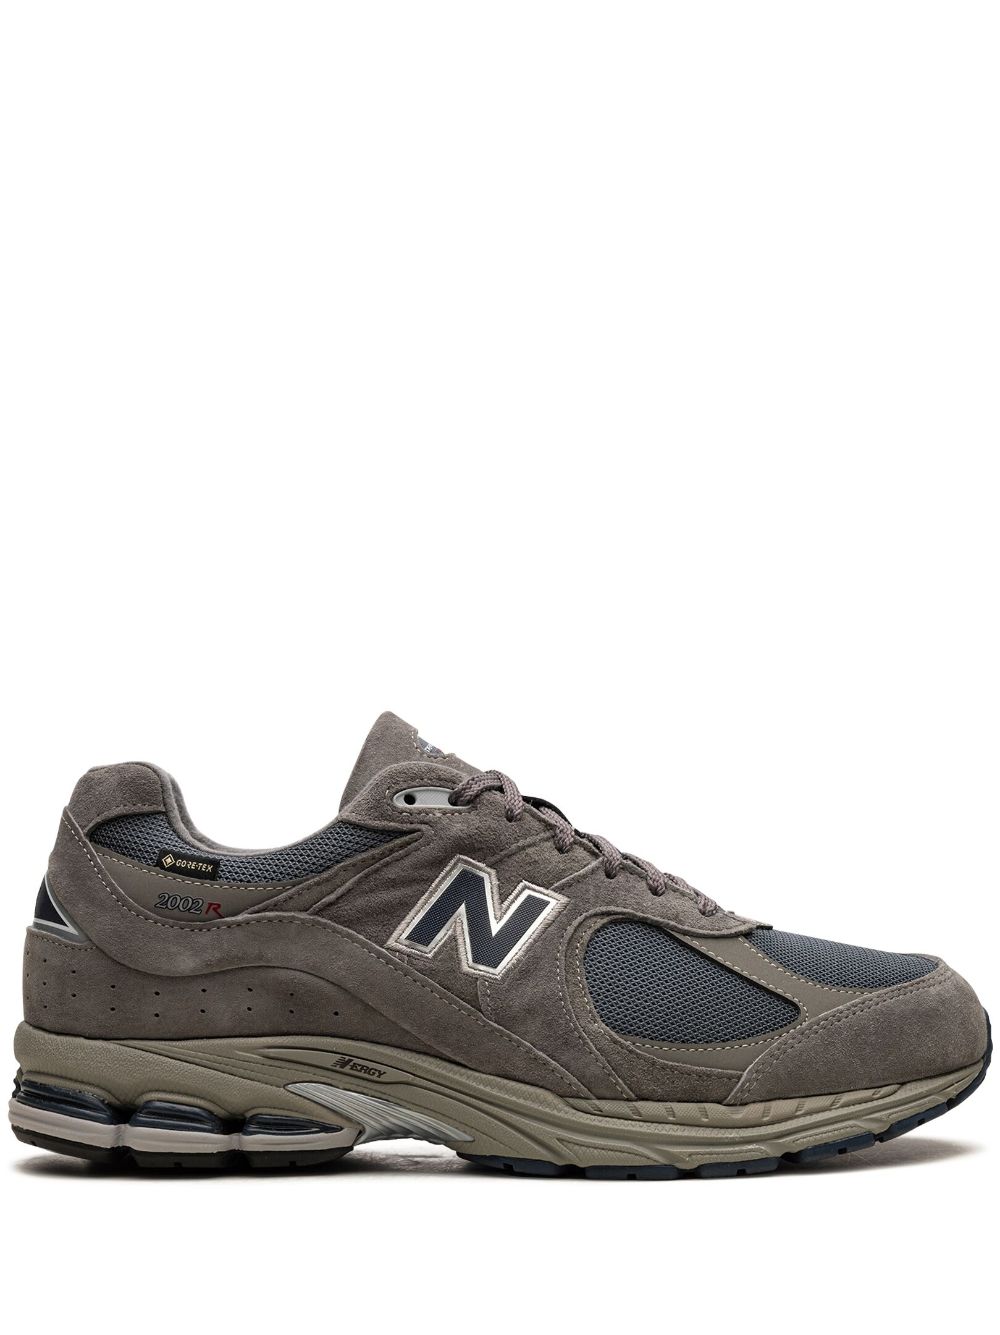 New Balance 2002R "Gore-Tex Castlerock" sneakers - CASTLEROCK/NATURAL INDIGO-BRUSHED NICKEL